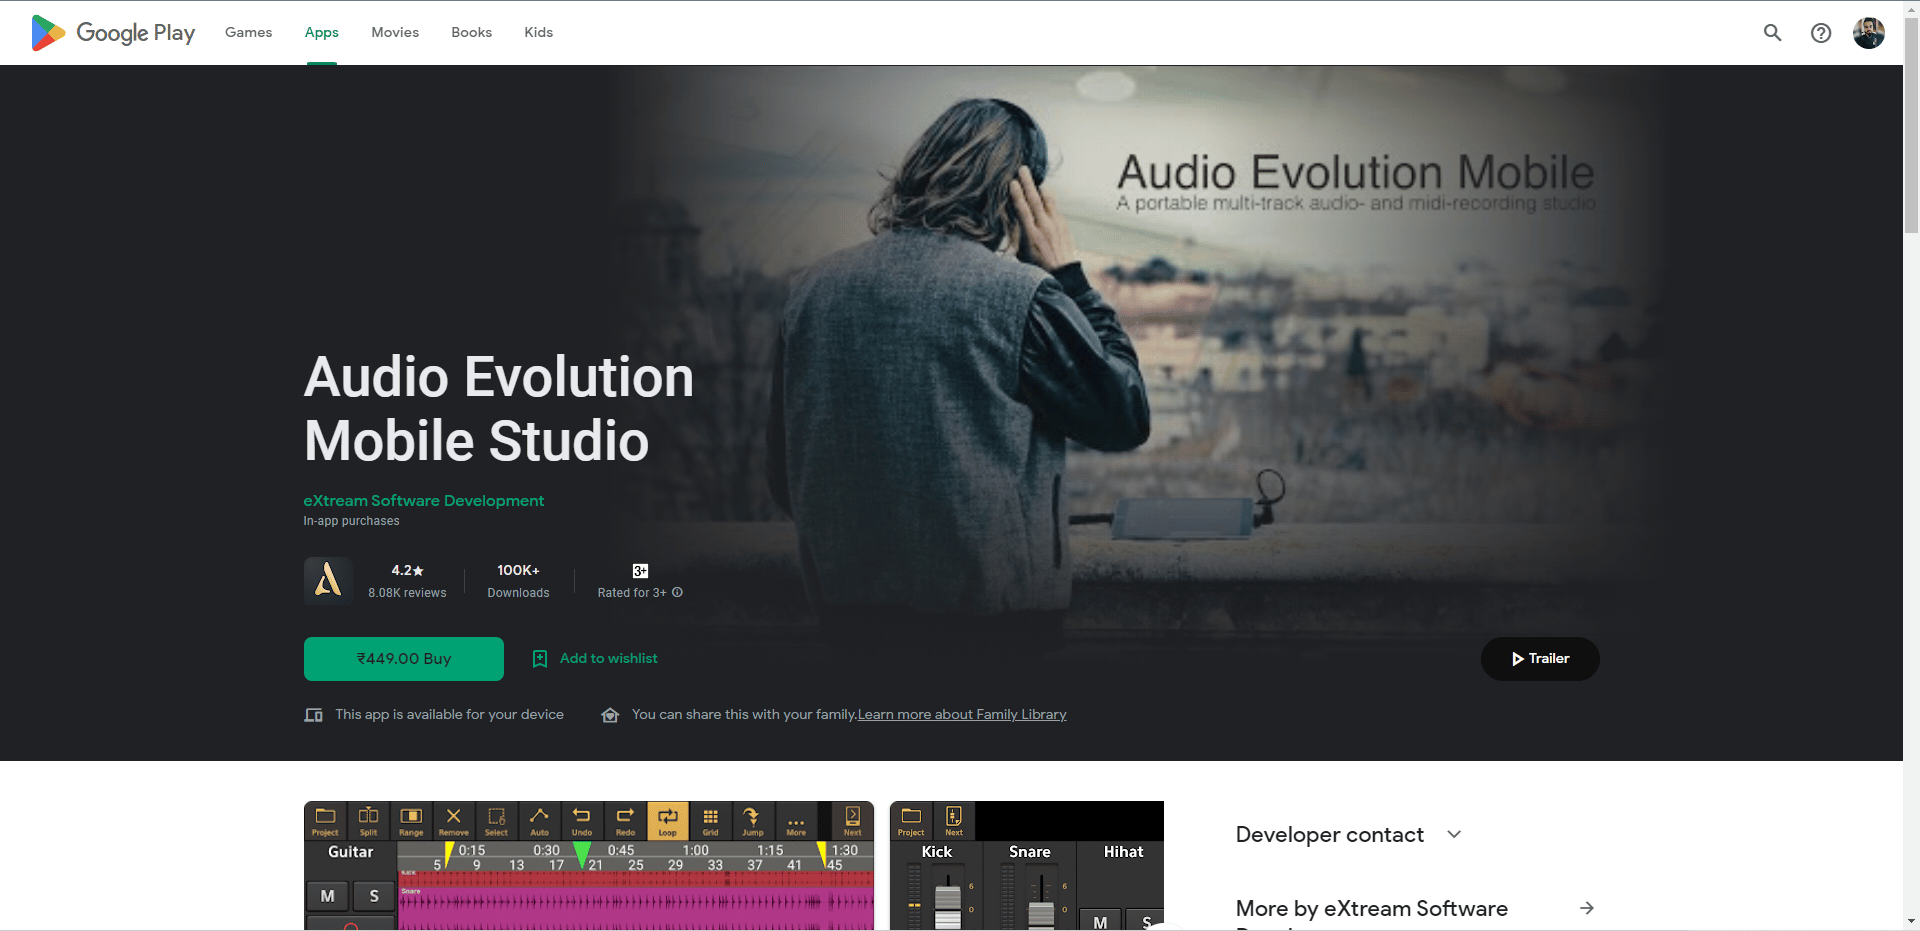 Audio Evolution Mobile Studio Play Store webpage